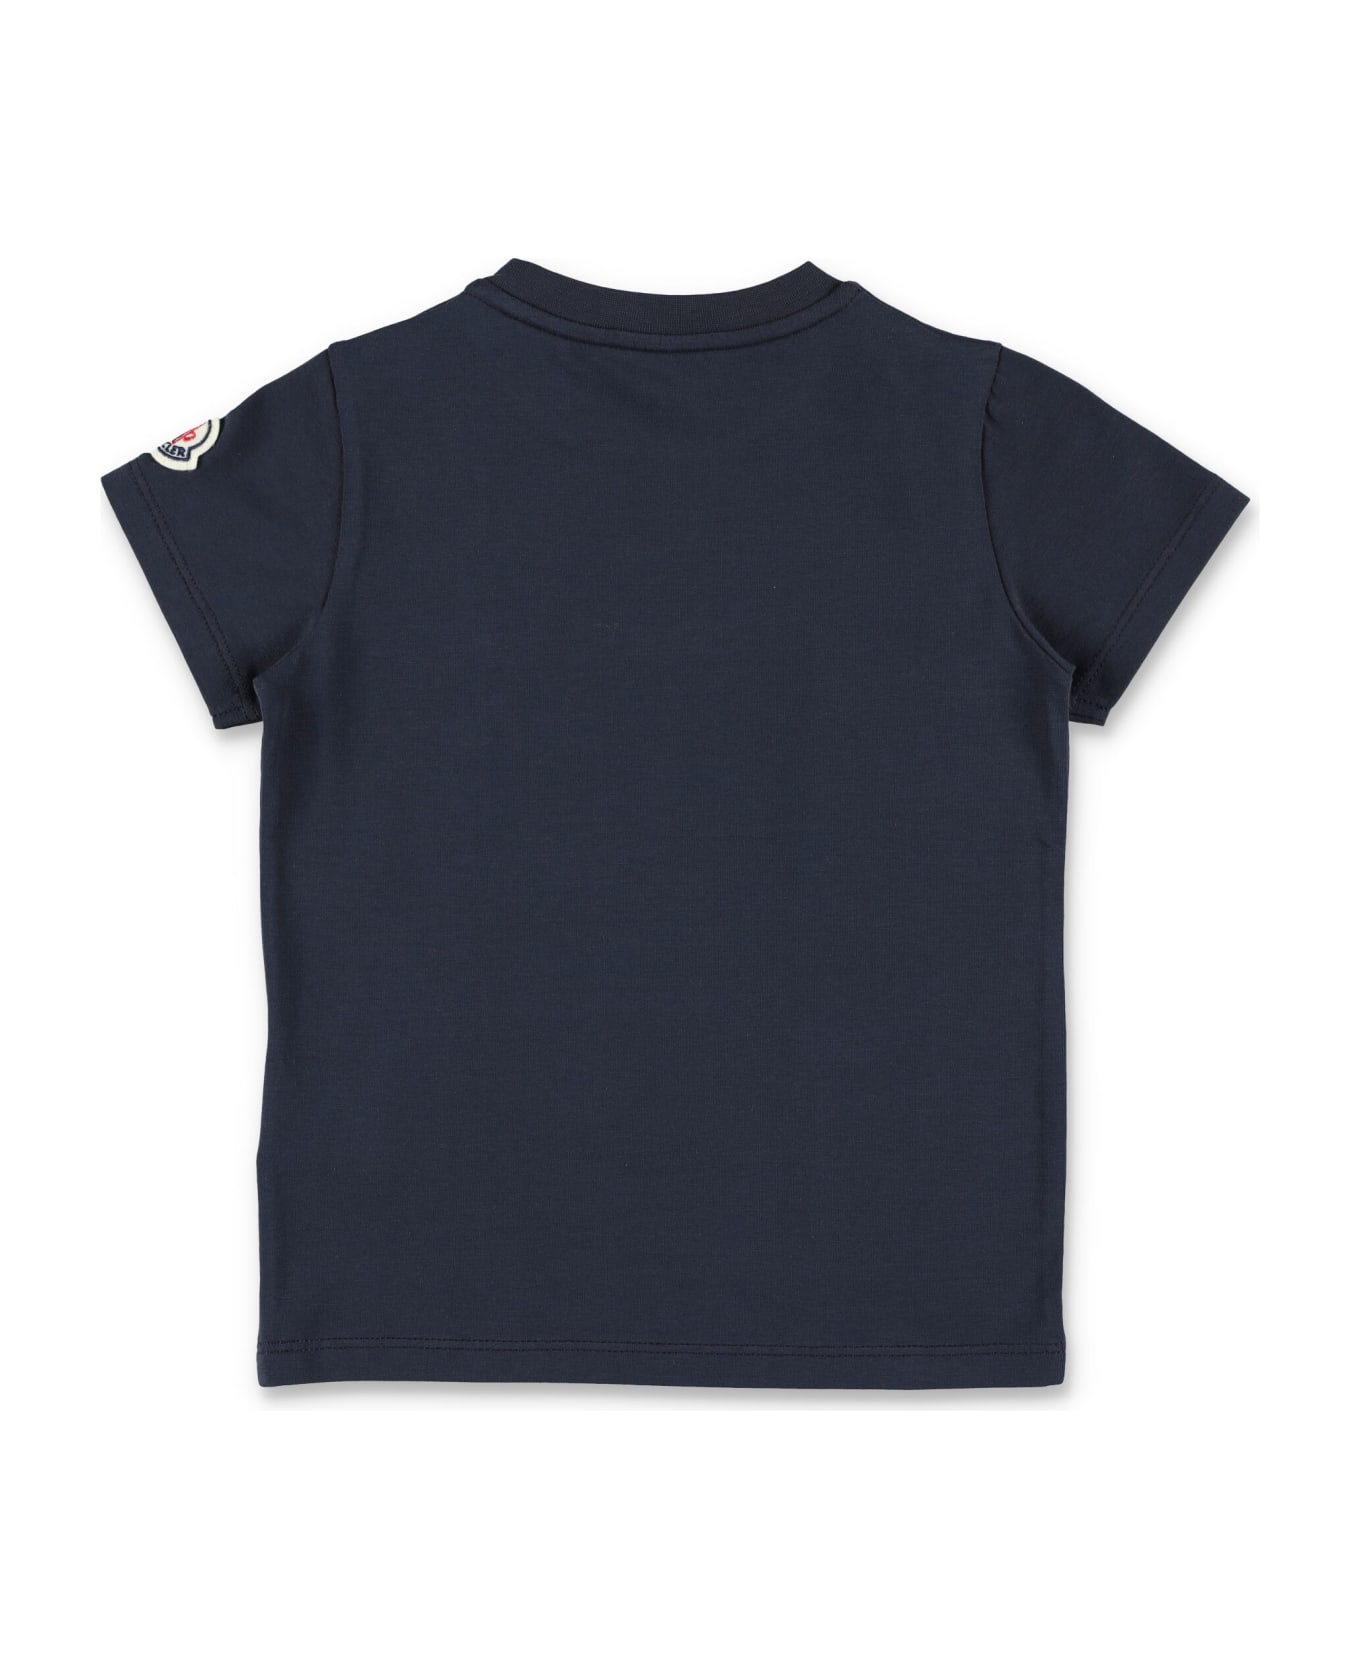 Moncler Short Sleeves T-shirt